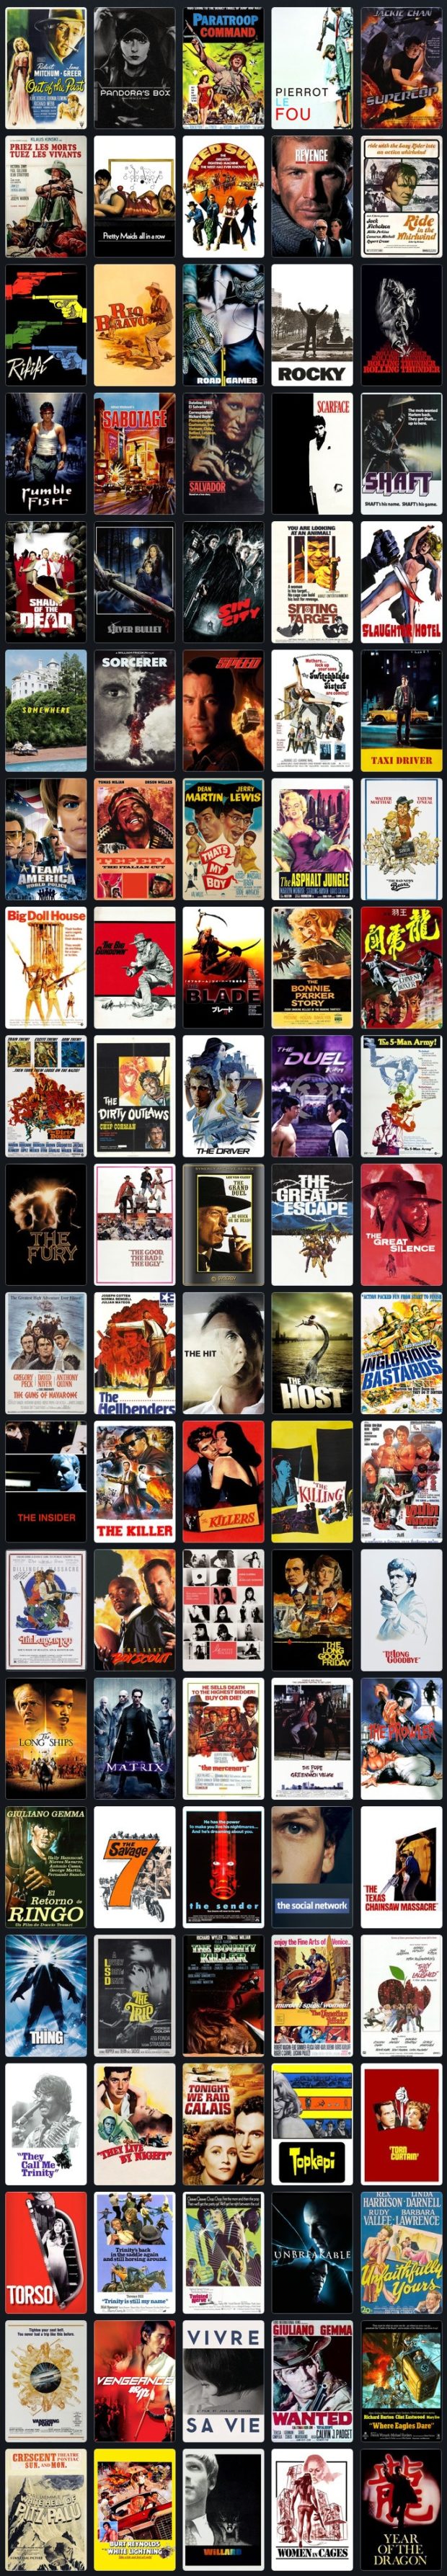 Tarantino'nun Favori Filmleri 2 – Tarantino’nun Favori Filmleri 2